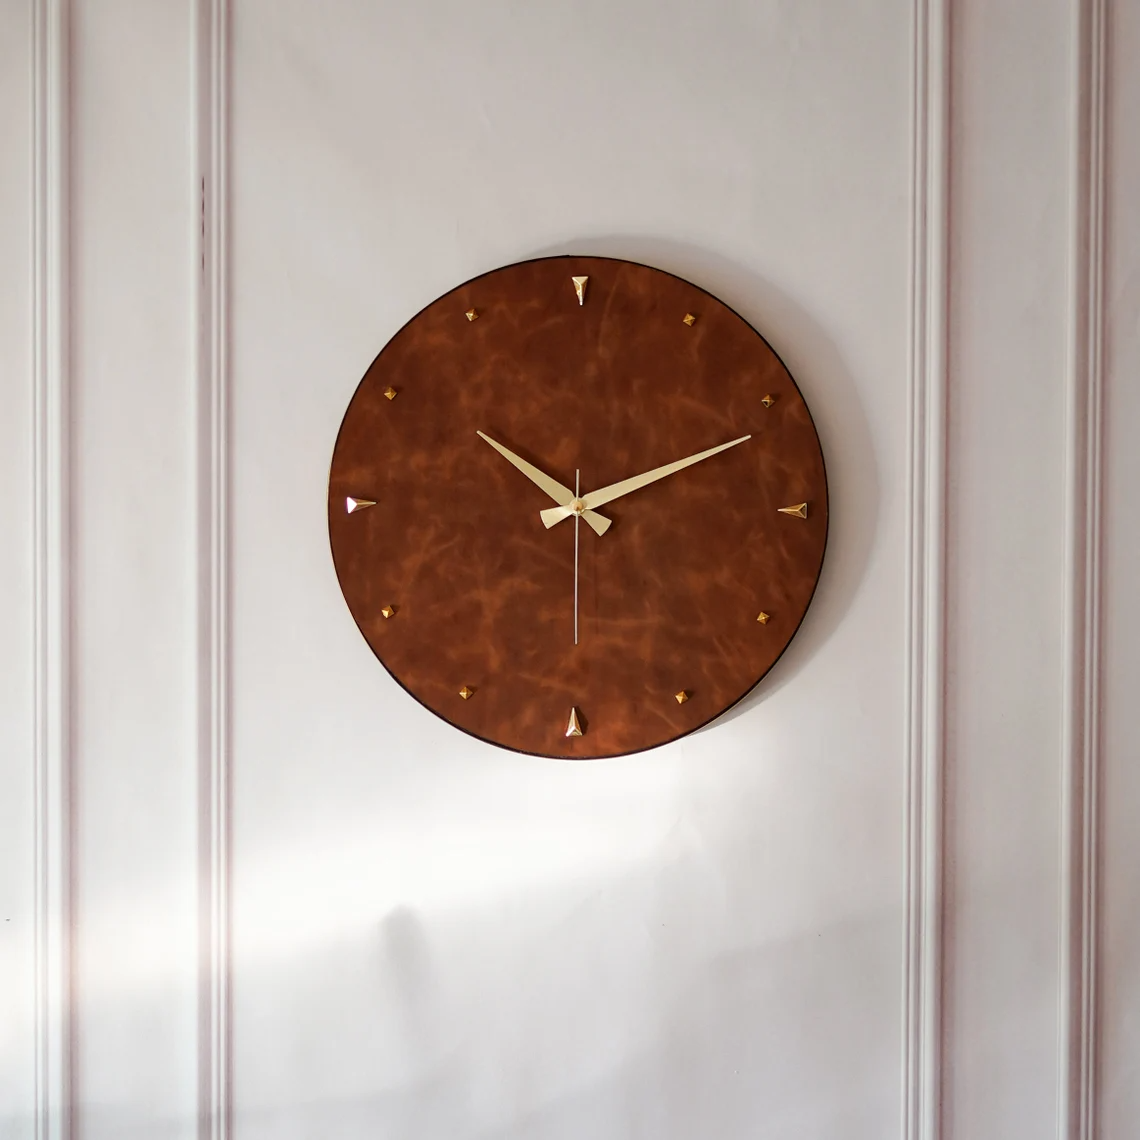 Leather Wall Clock, Black Wall Clock, Unique Wall Clock, Large Wall Clock